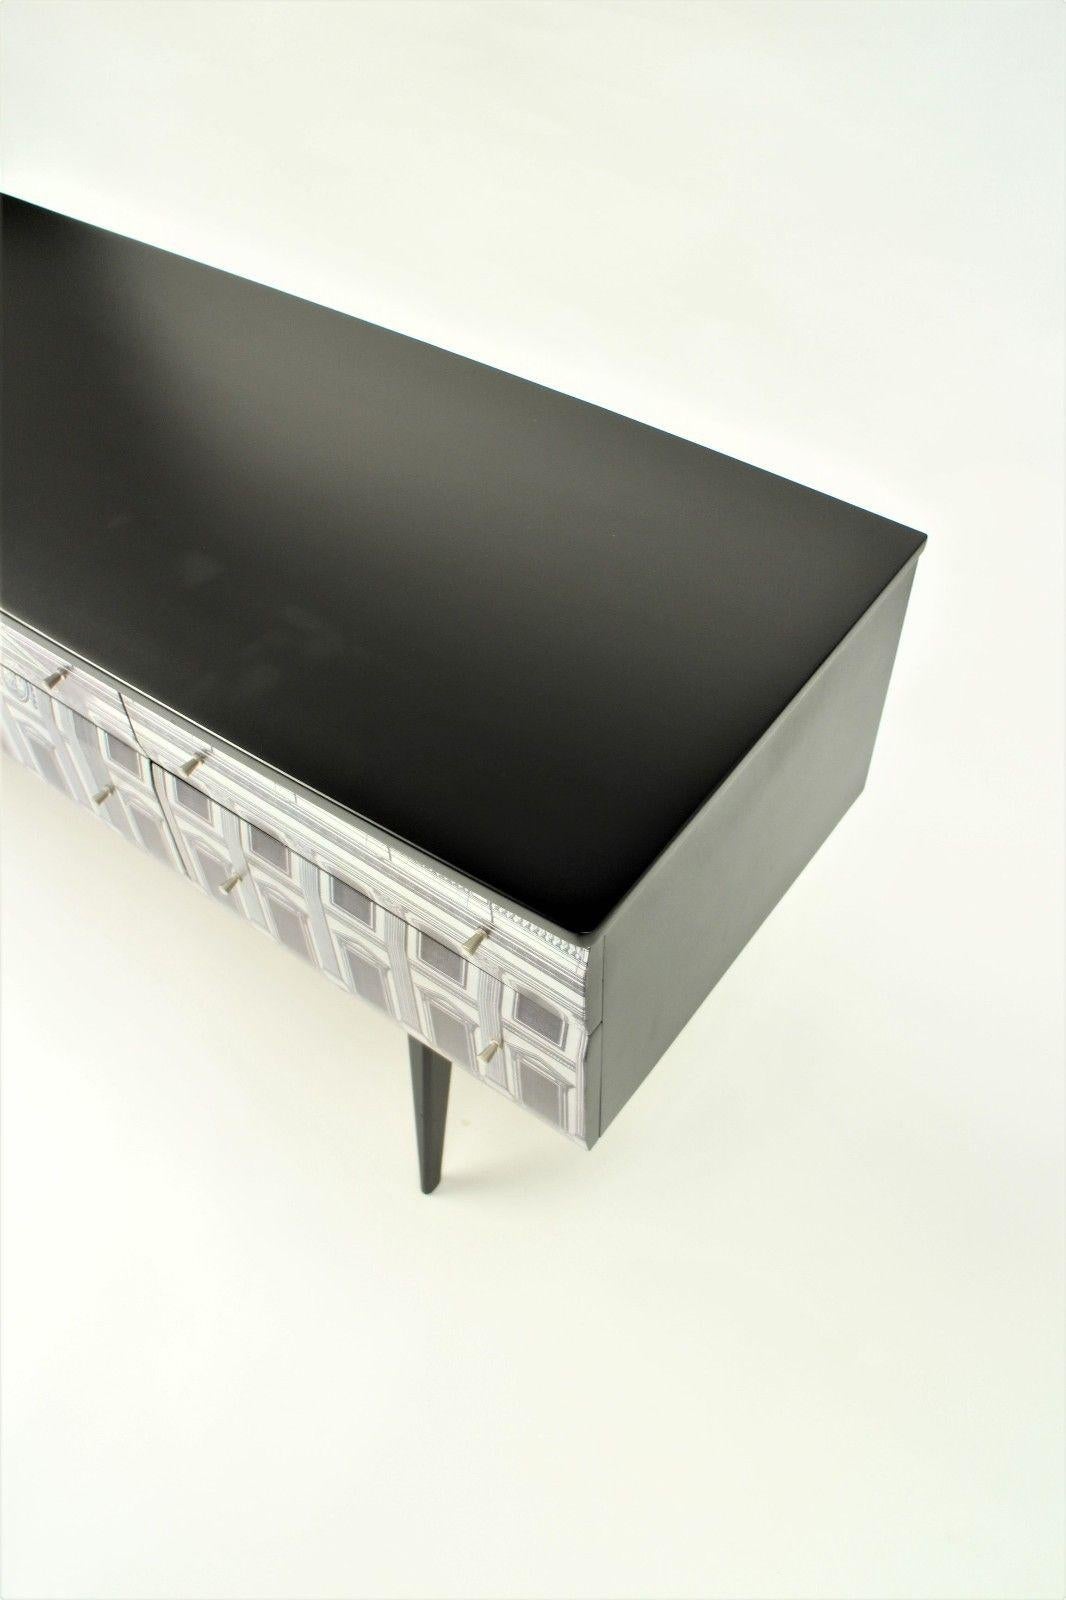 20th Century Midcentury Sideboard, Fornasetti Style Dresser Credenza G Plan Black